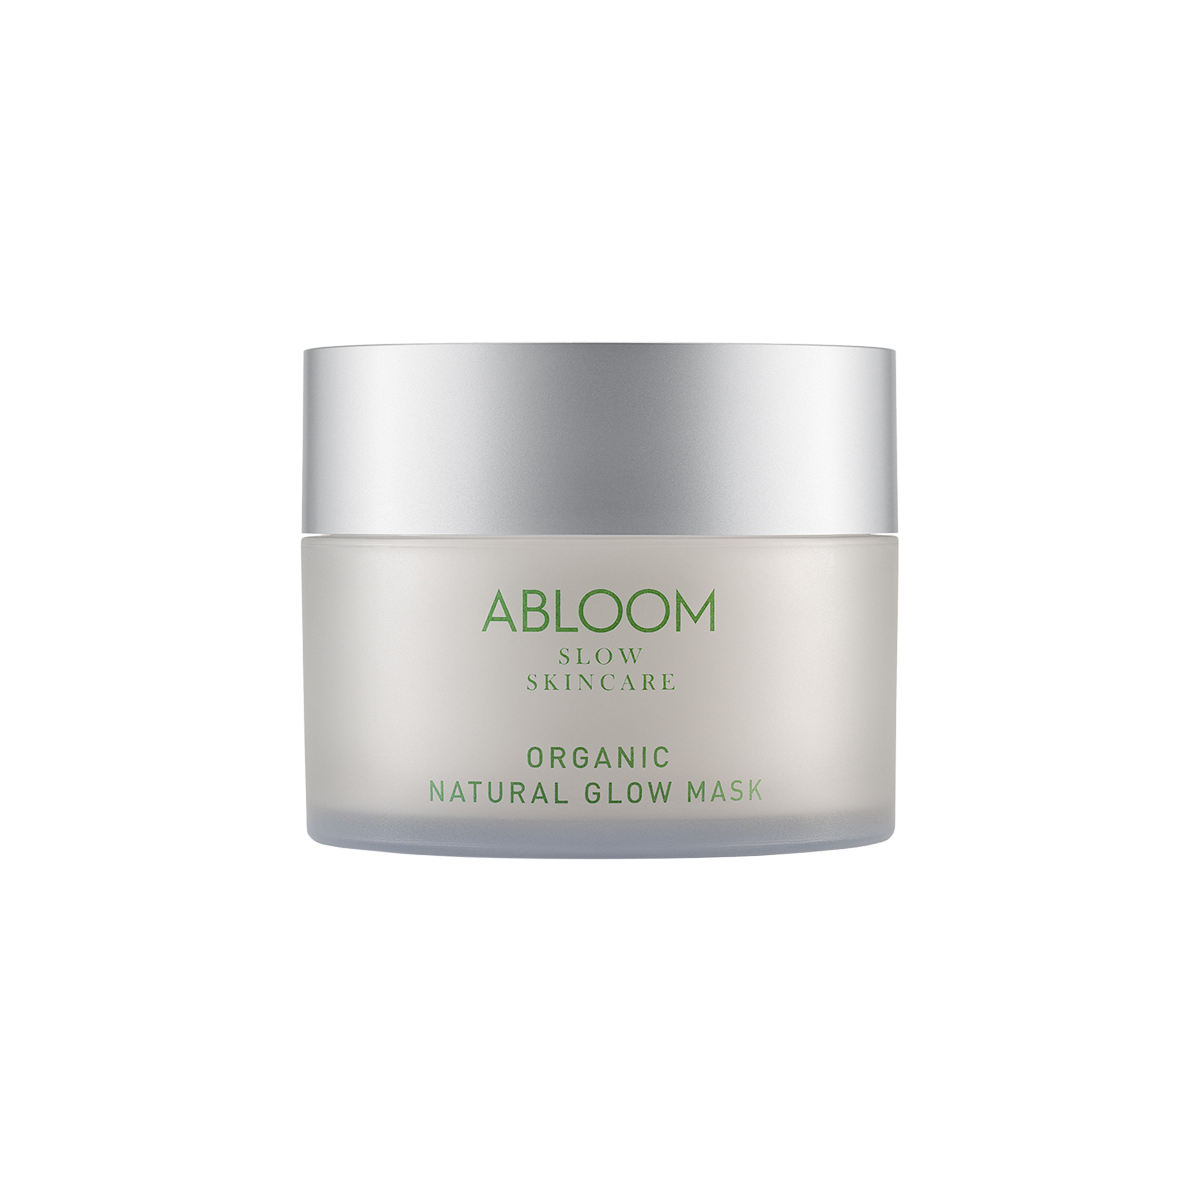 ABLOOM - Organic Natural Glow Mask